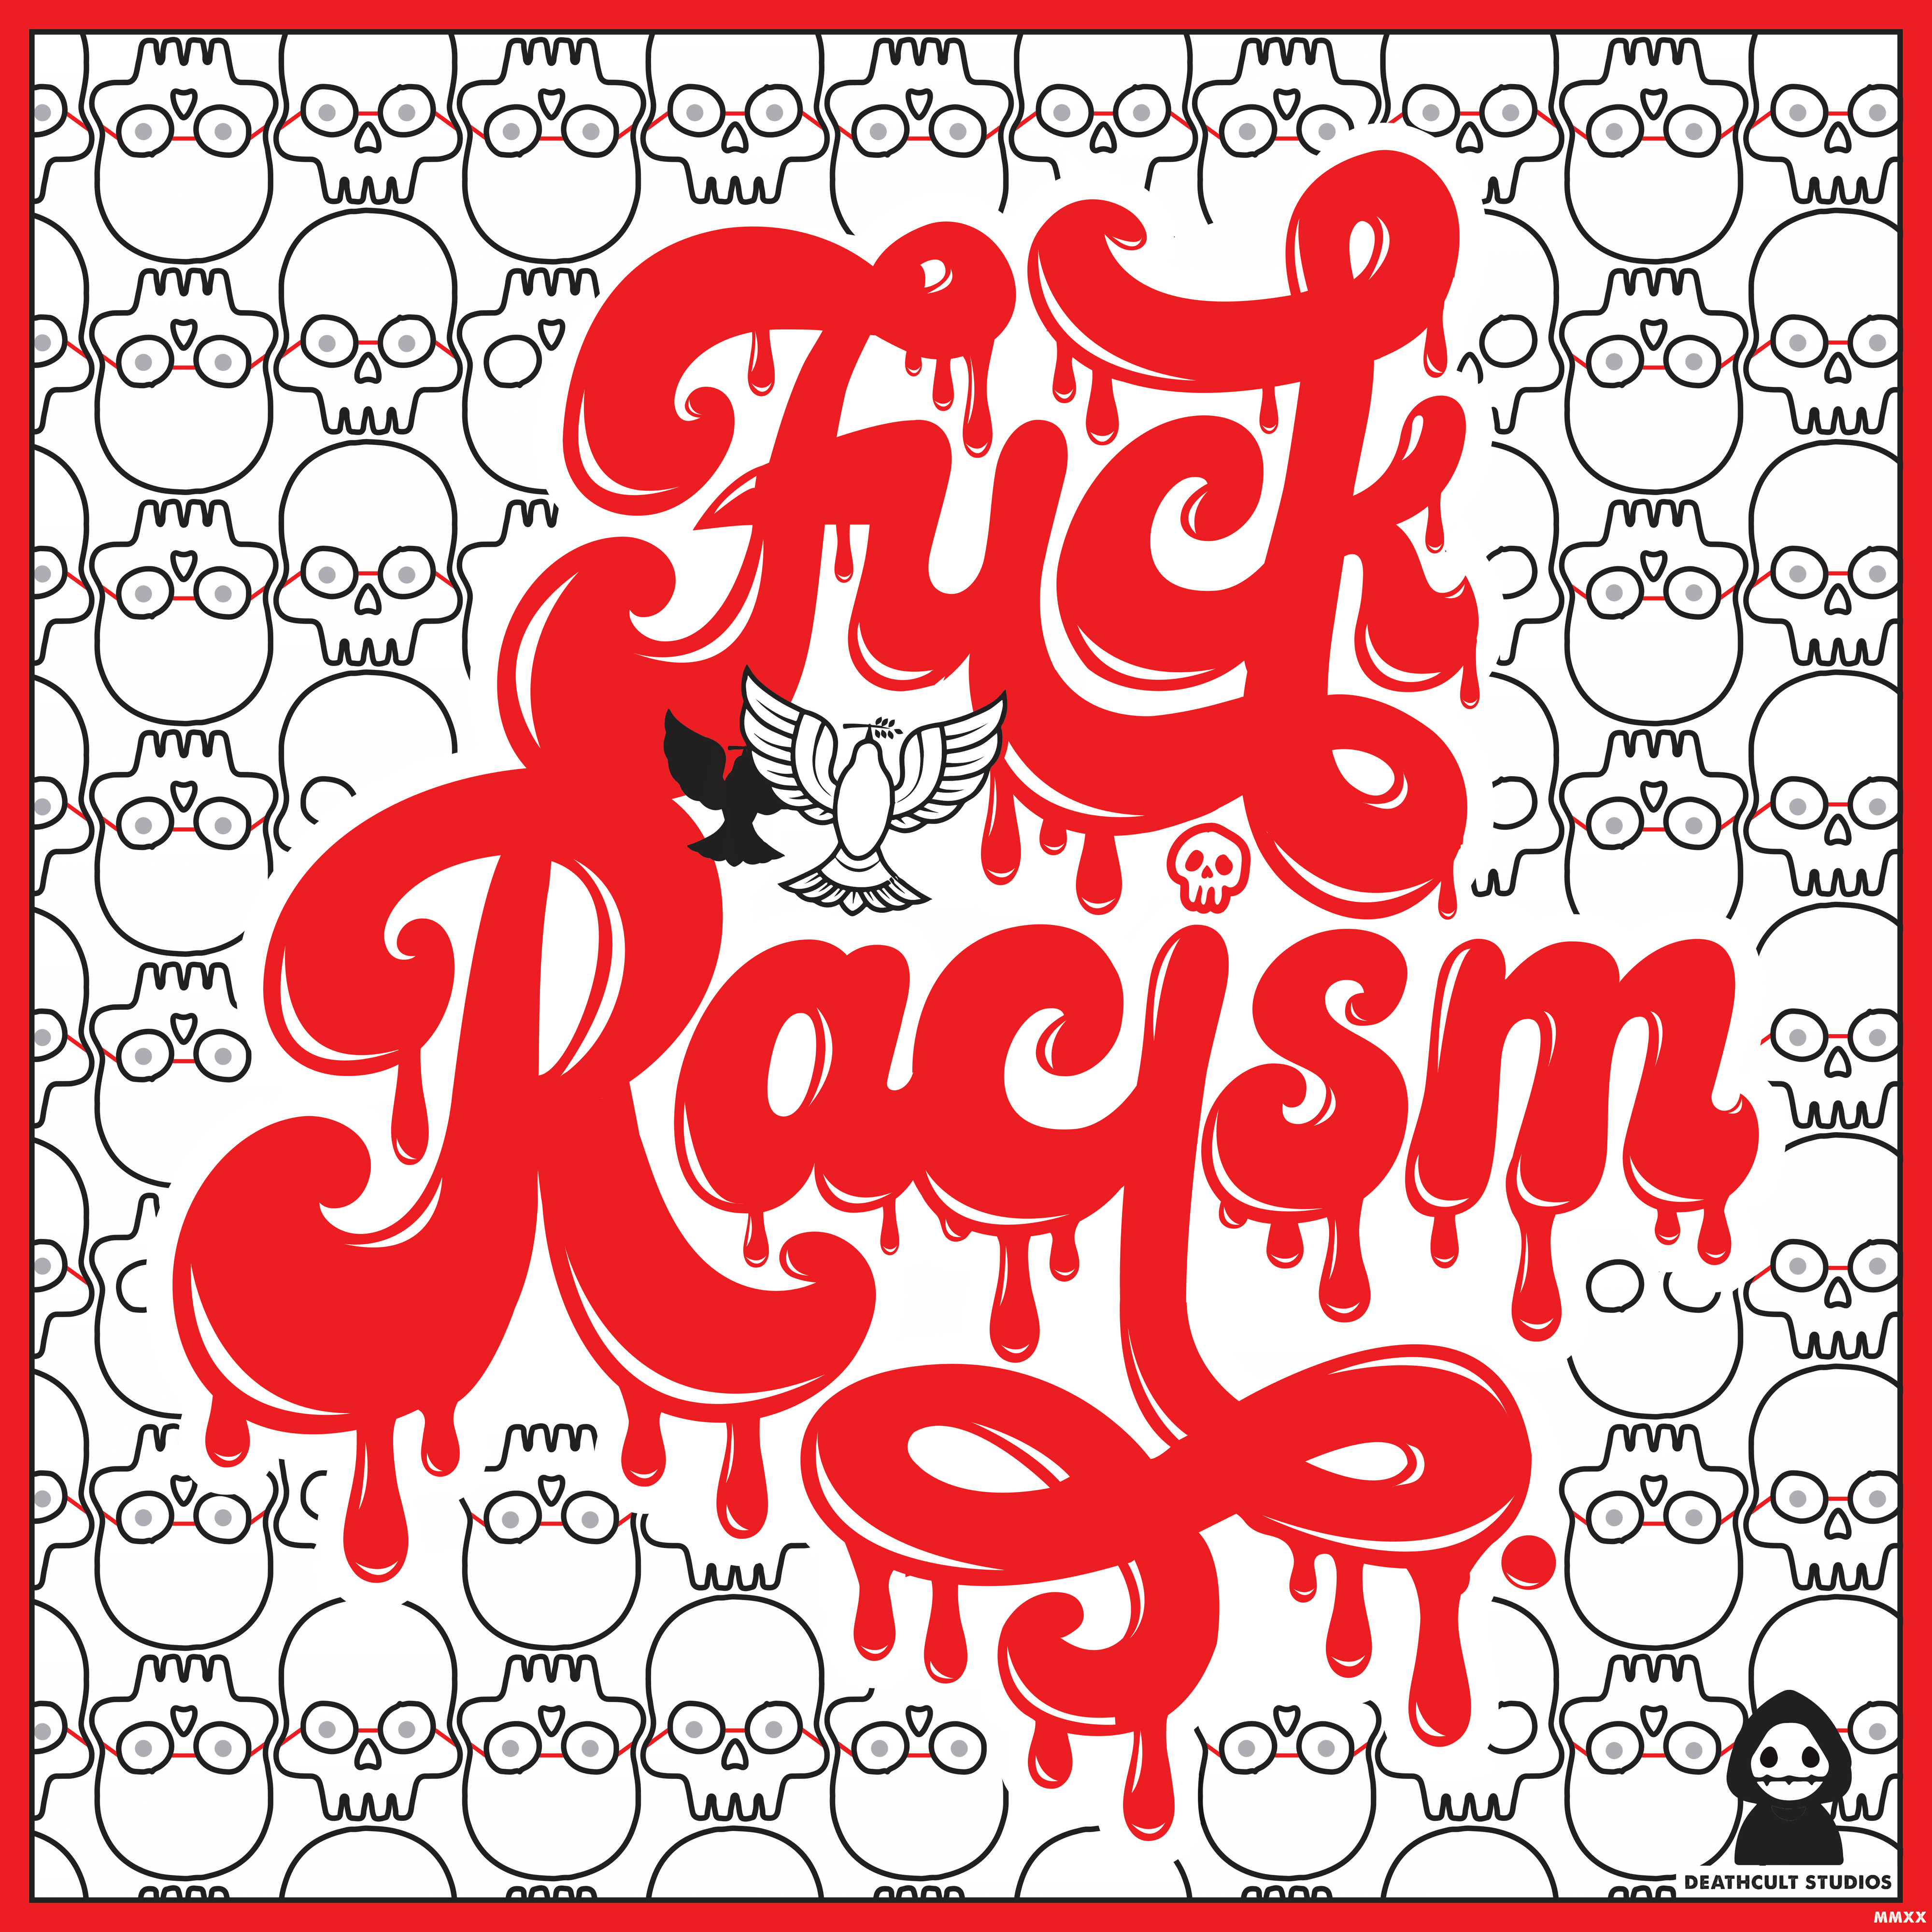 Deathcult Studios - Fuck Racism